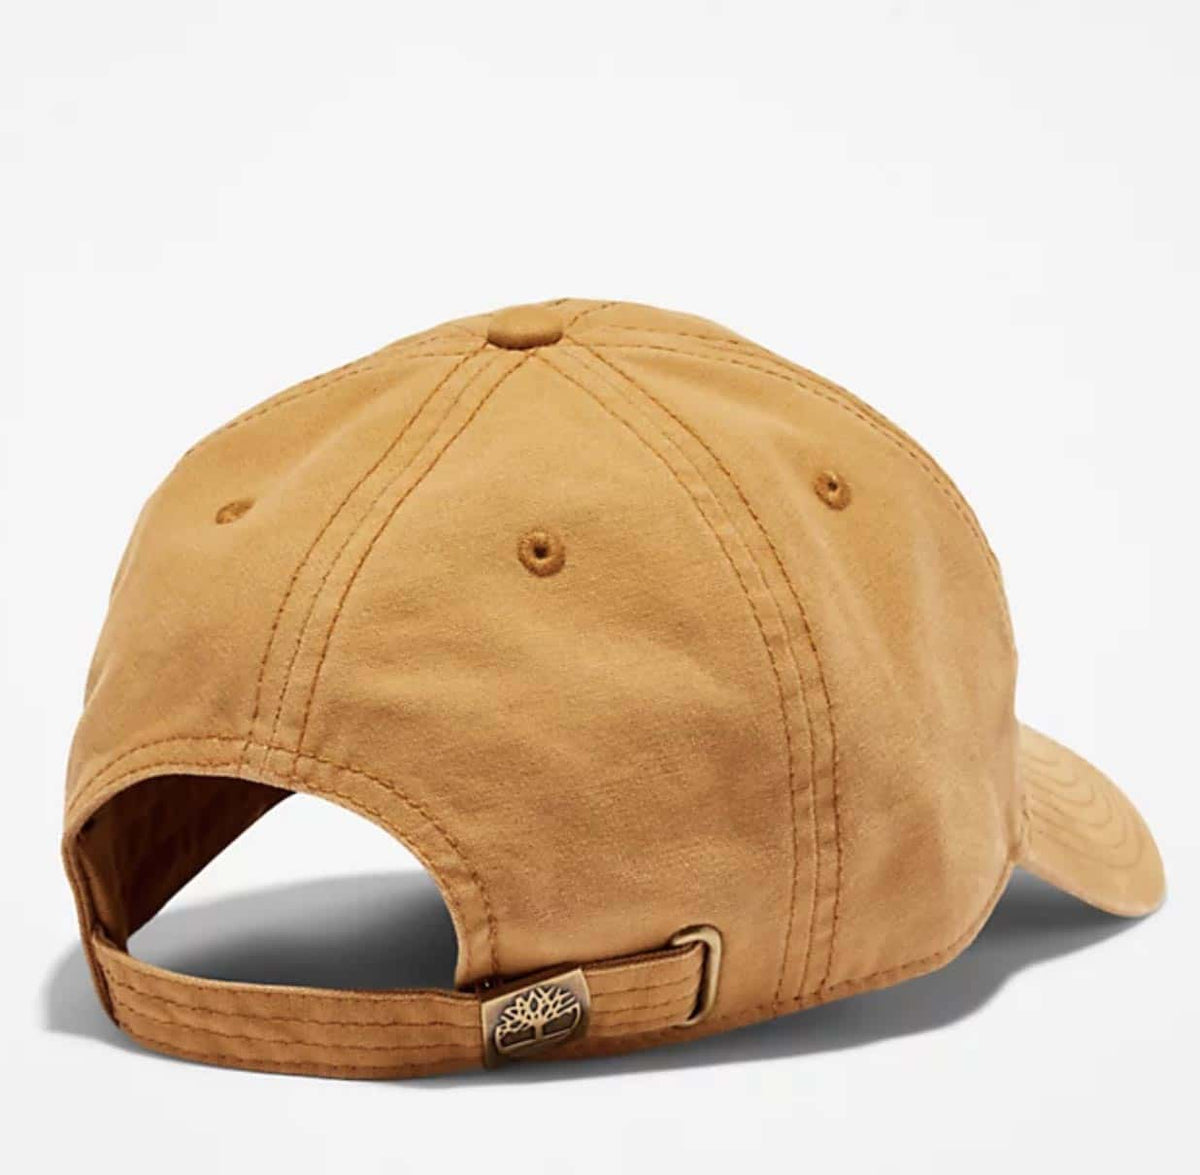 Timberland hat